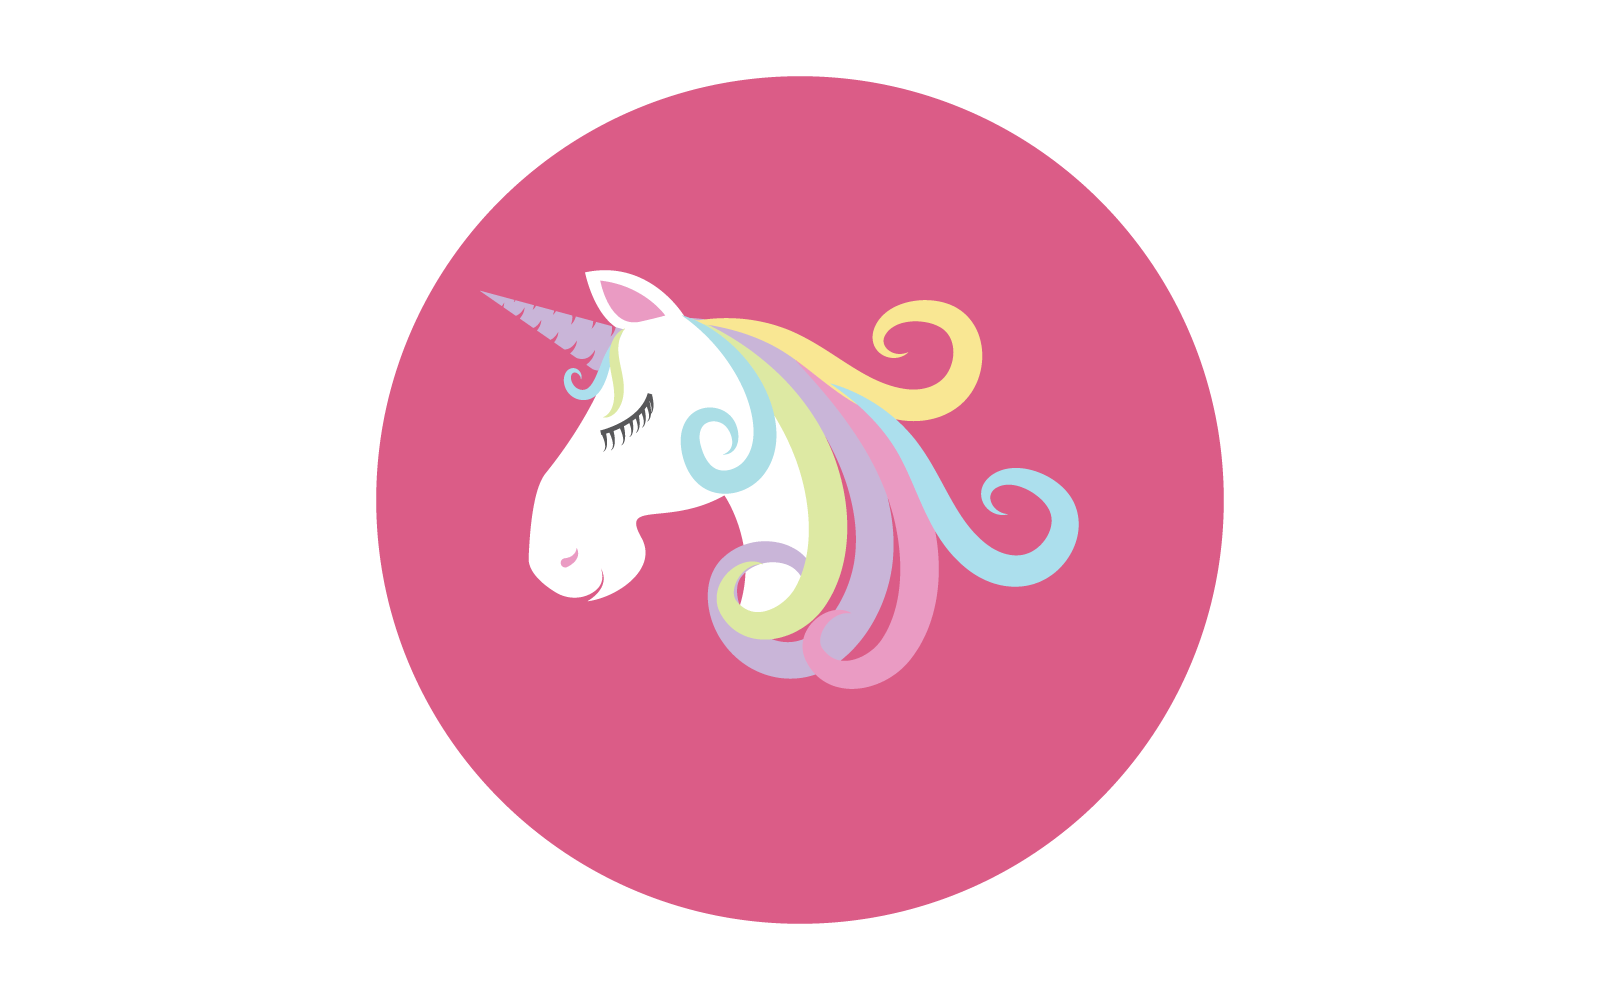 Unicorn character illustration vector flat design